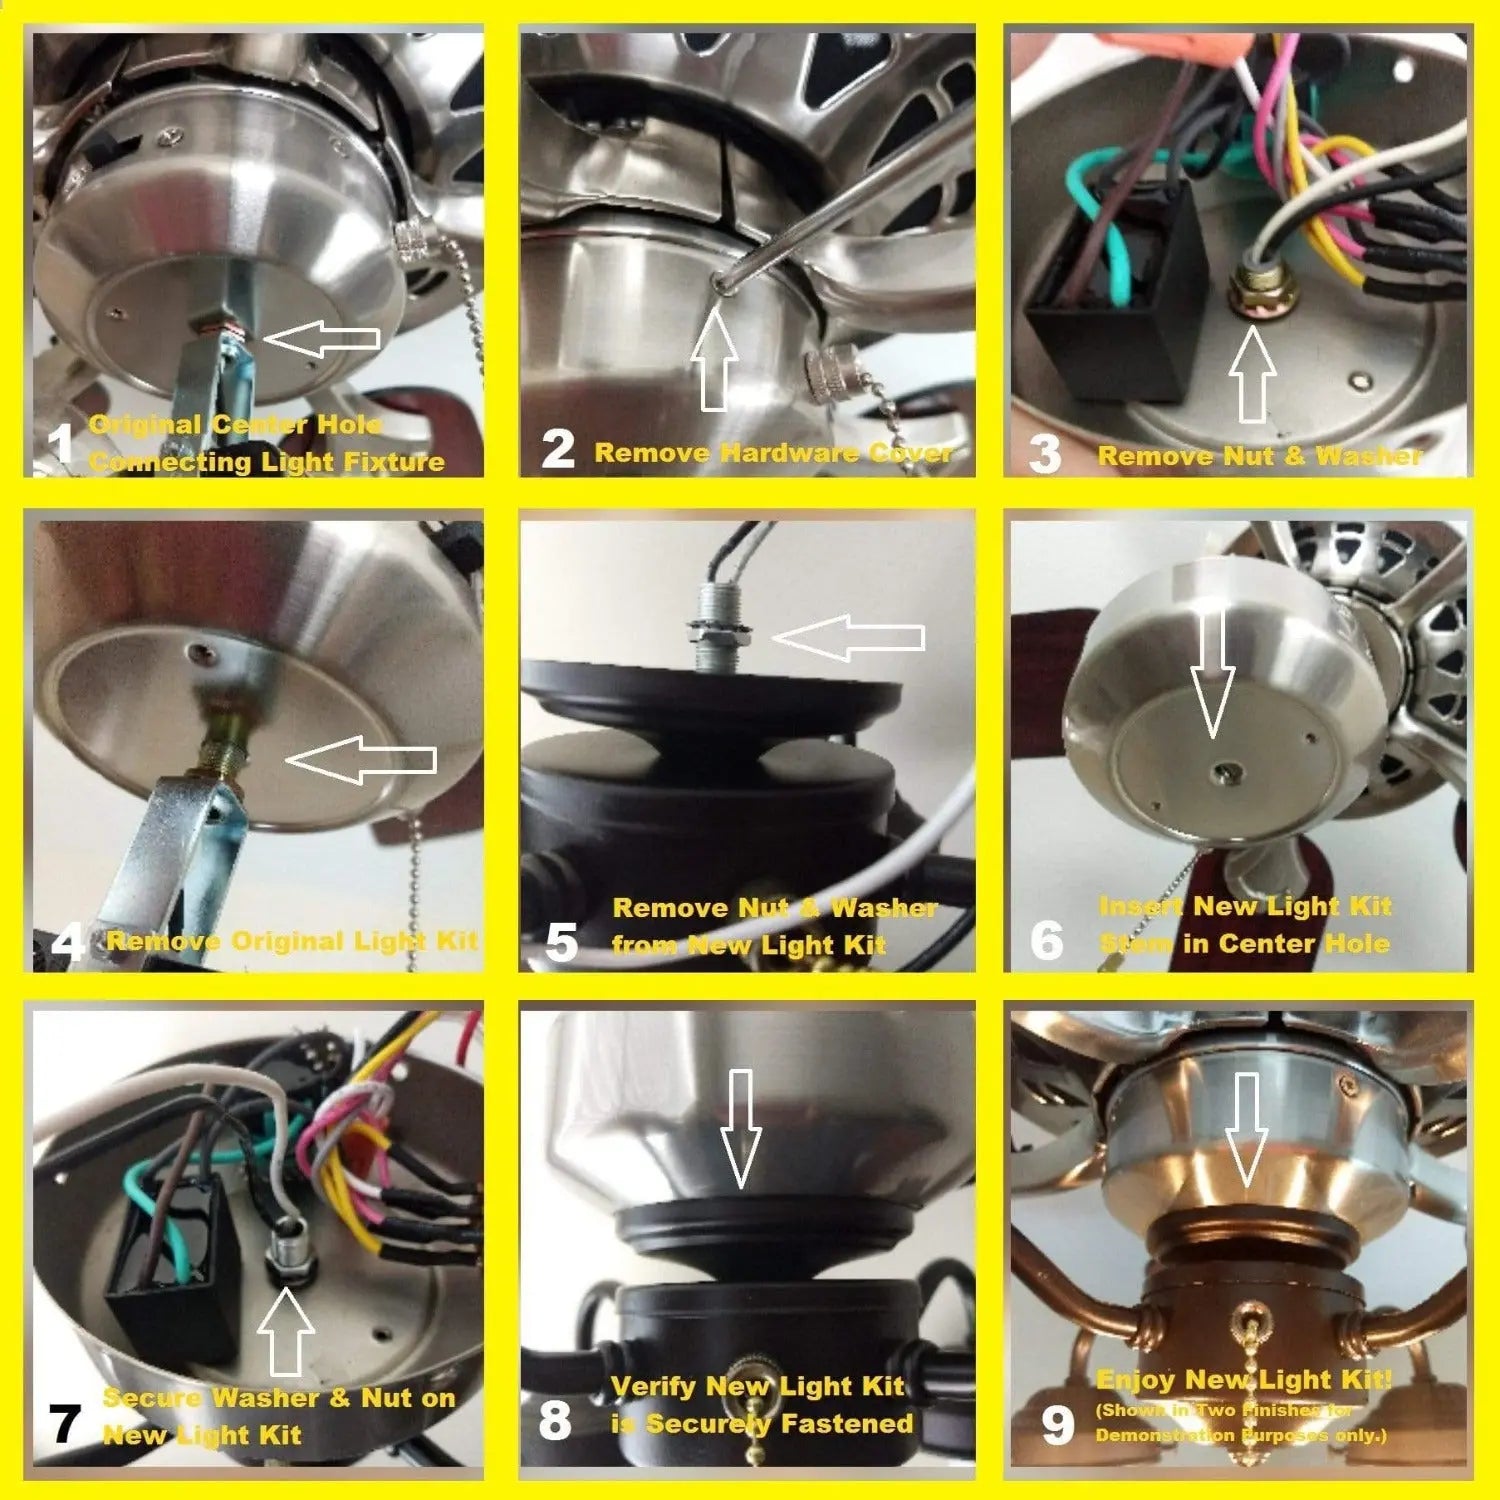 Mason Jar CEILING FAN Light Kit of Vintage Pint Jars - The Lamp Goods